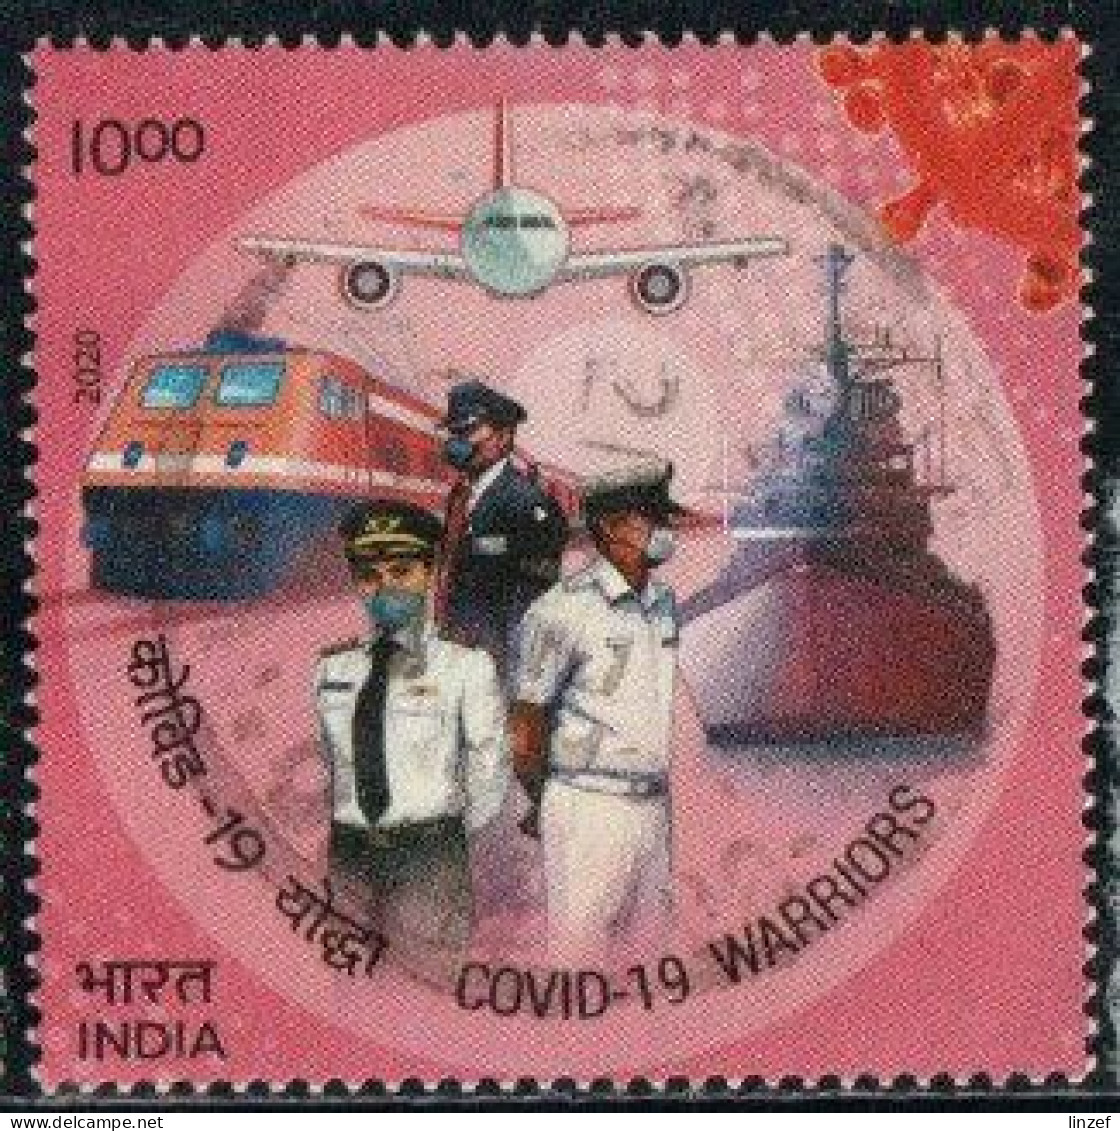 Inde 2020 Yv. N°3392 - Lutte Contre La Covid-19 - Personnels Du Transport - Oblitéré - Used Stamps